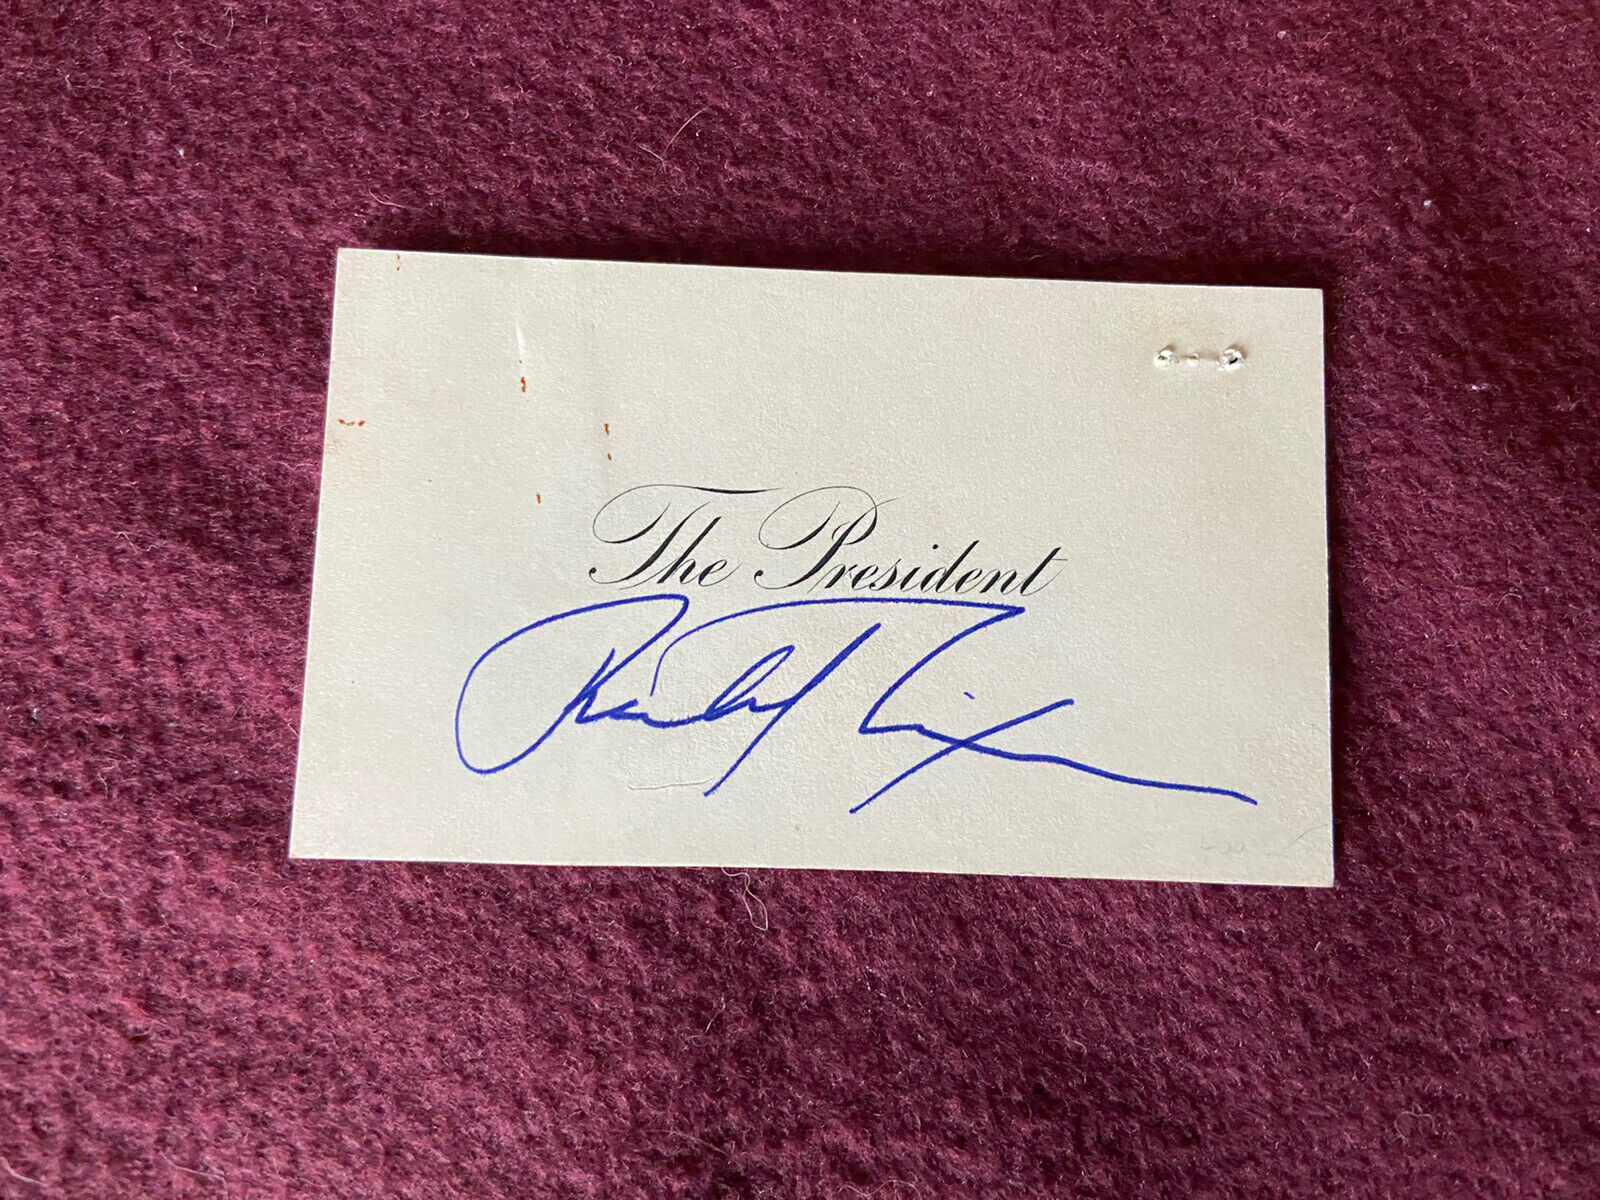 President Richard Nixon Signed “The President” White House Card - Rare